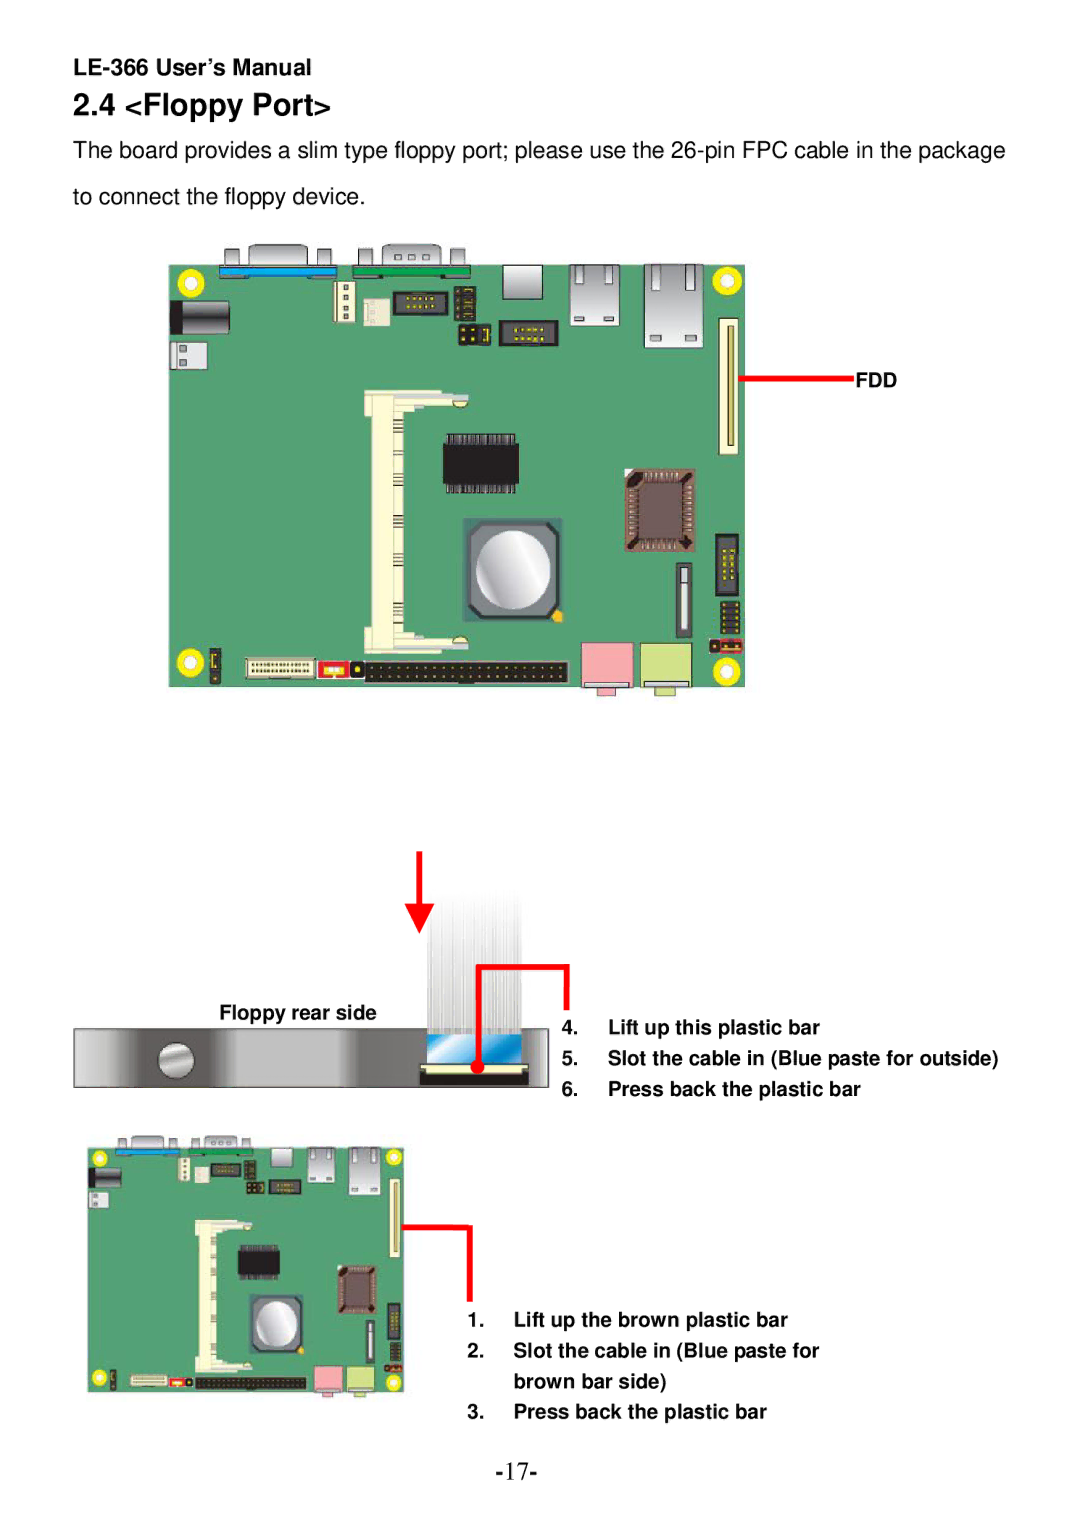 AMD LE-366 user manual Floppy Port, Fdd 